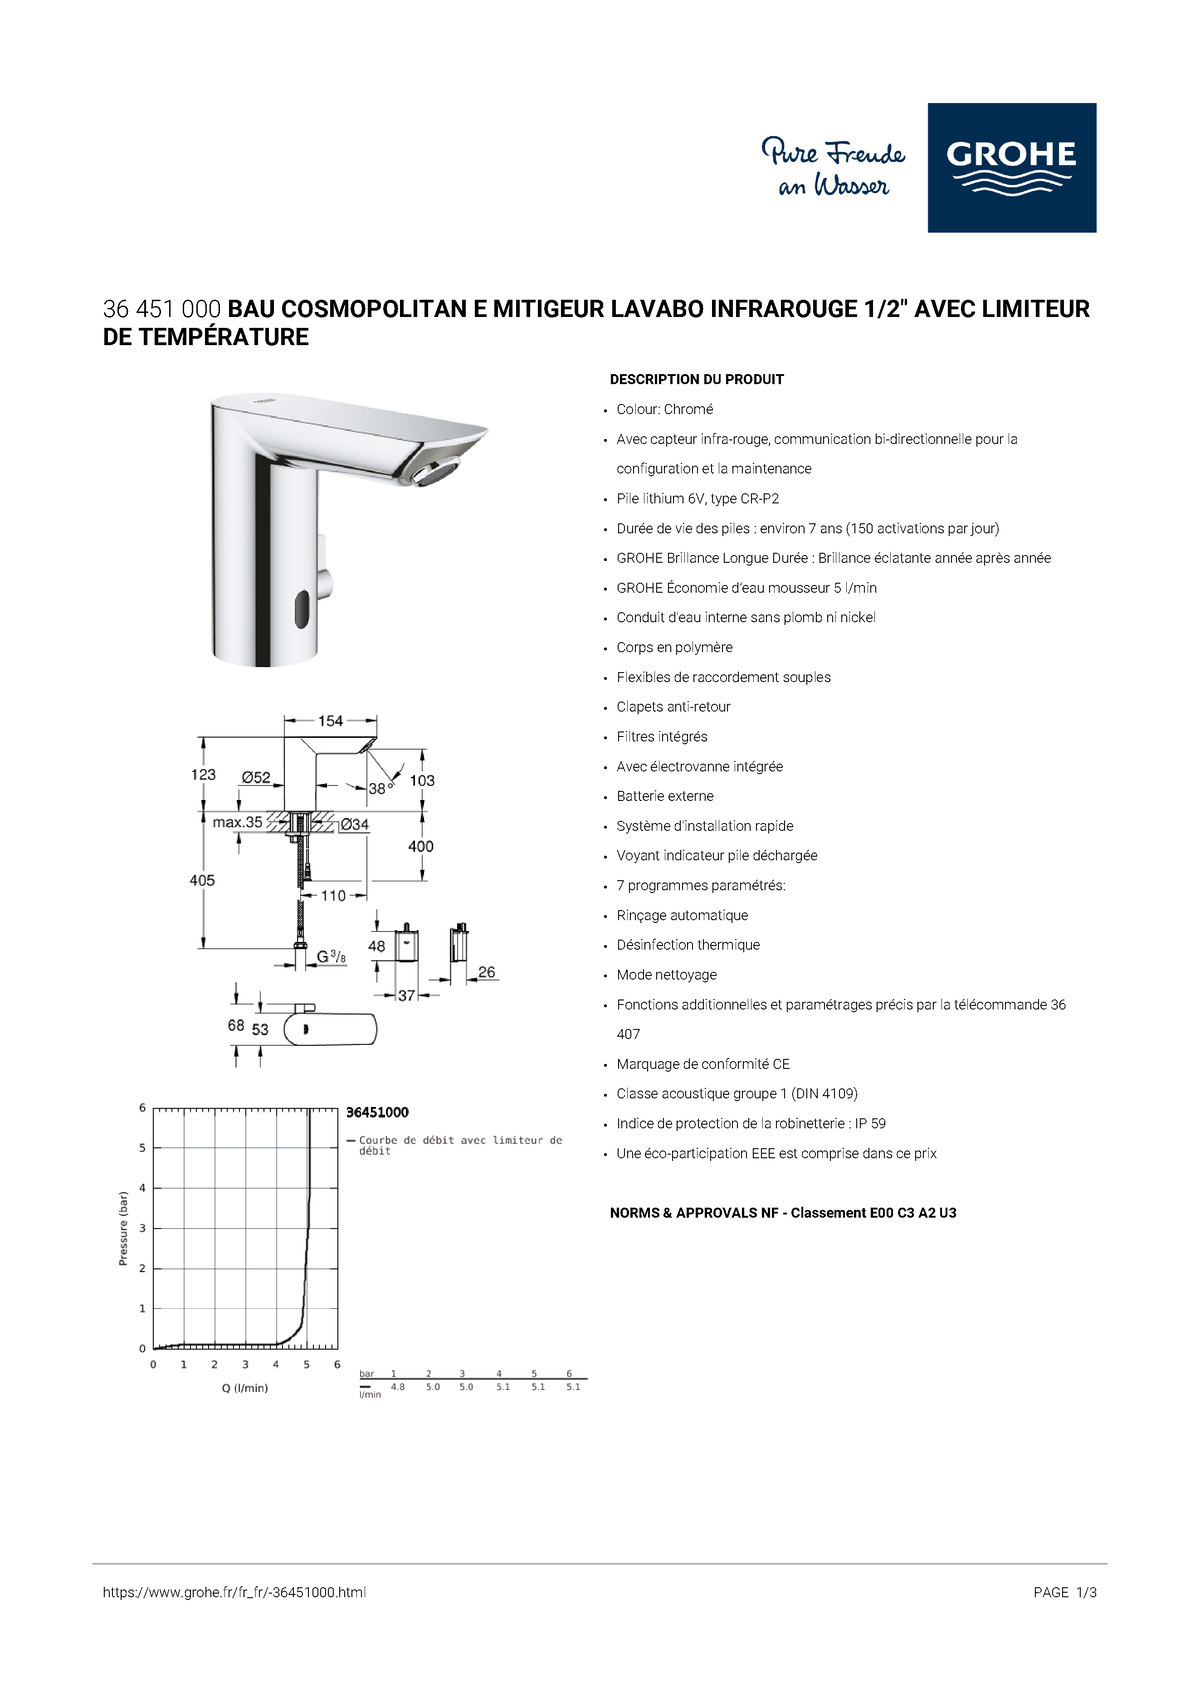 Mitigeur lavabo infrarouge GROHE Bau Cosmopolitan E 36451000